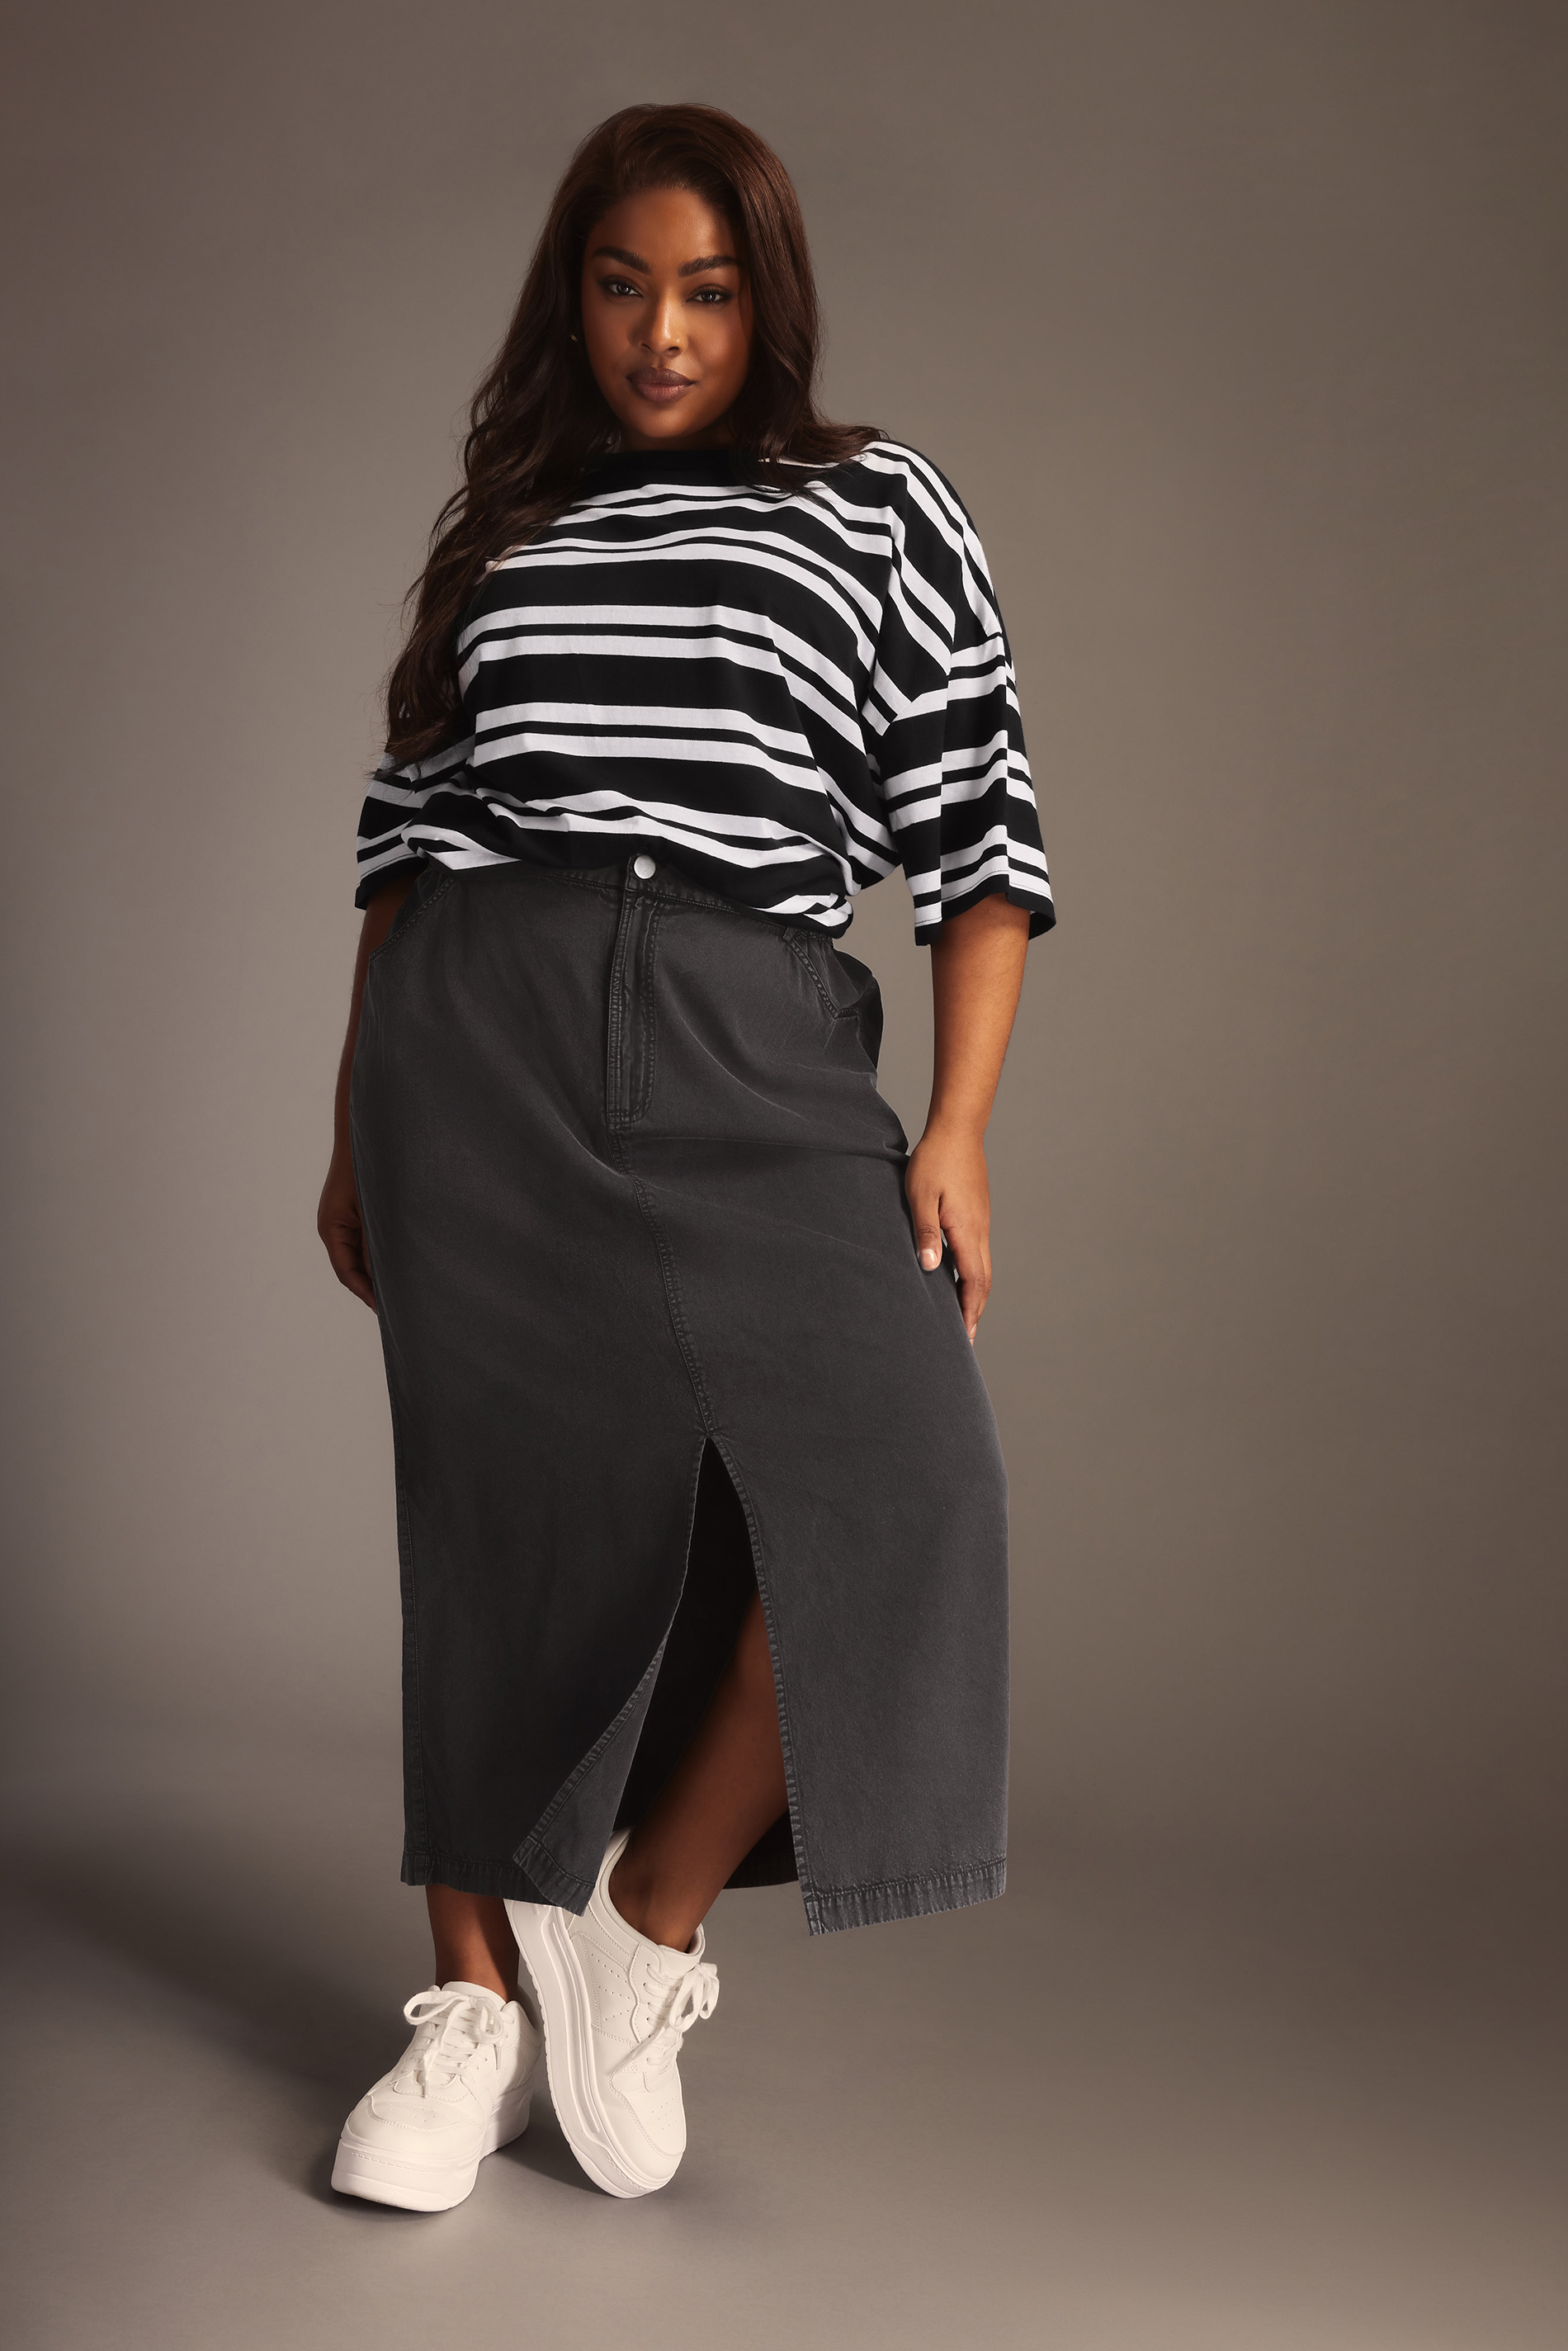 Womens Denim Skirt Knee Straight Stretch Skirts NEW Plus Size 18 20 16 14  Indigo | eBay